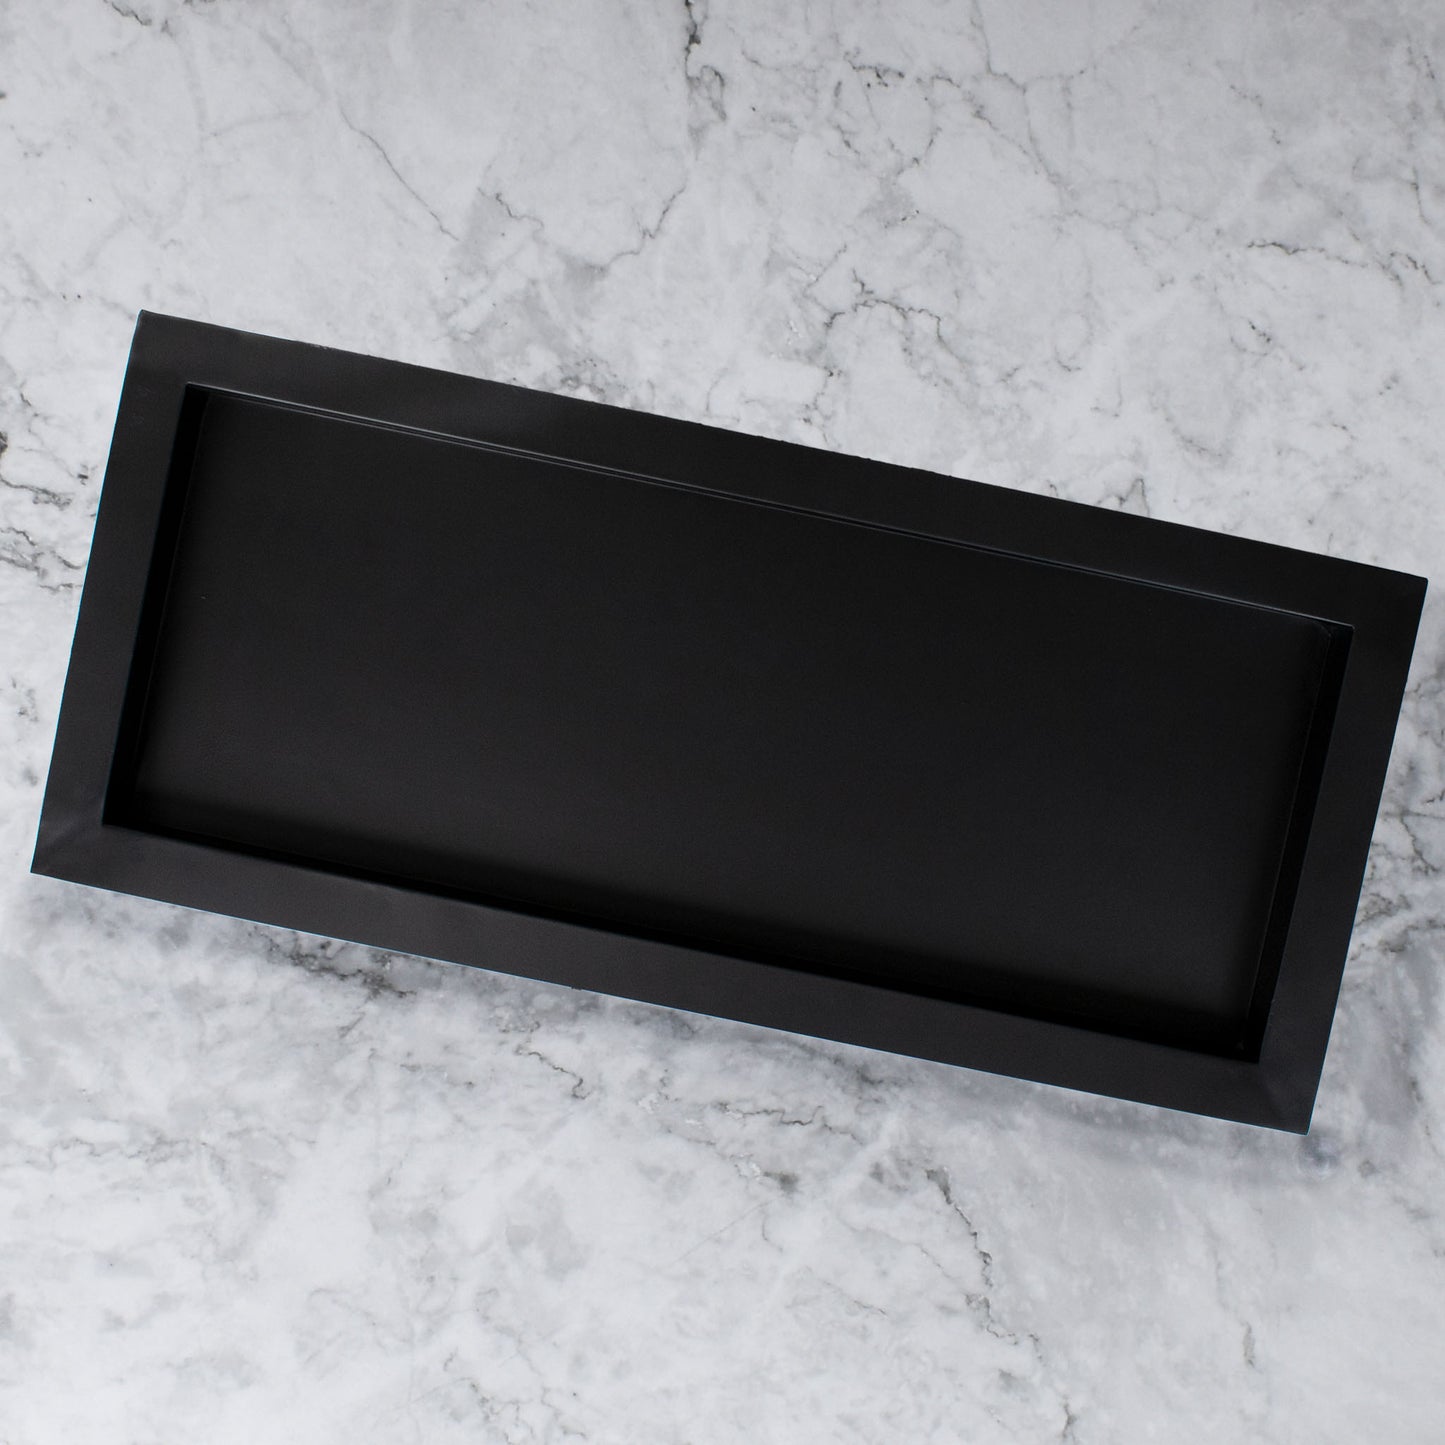 Black matte metal centerpiece tray on marble countertop.